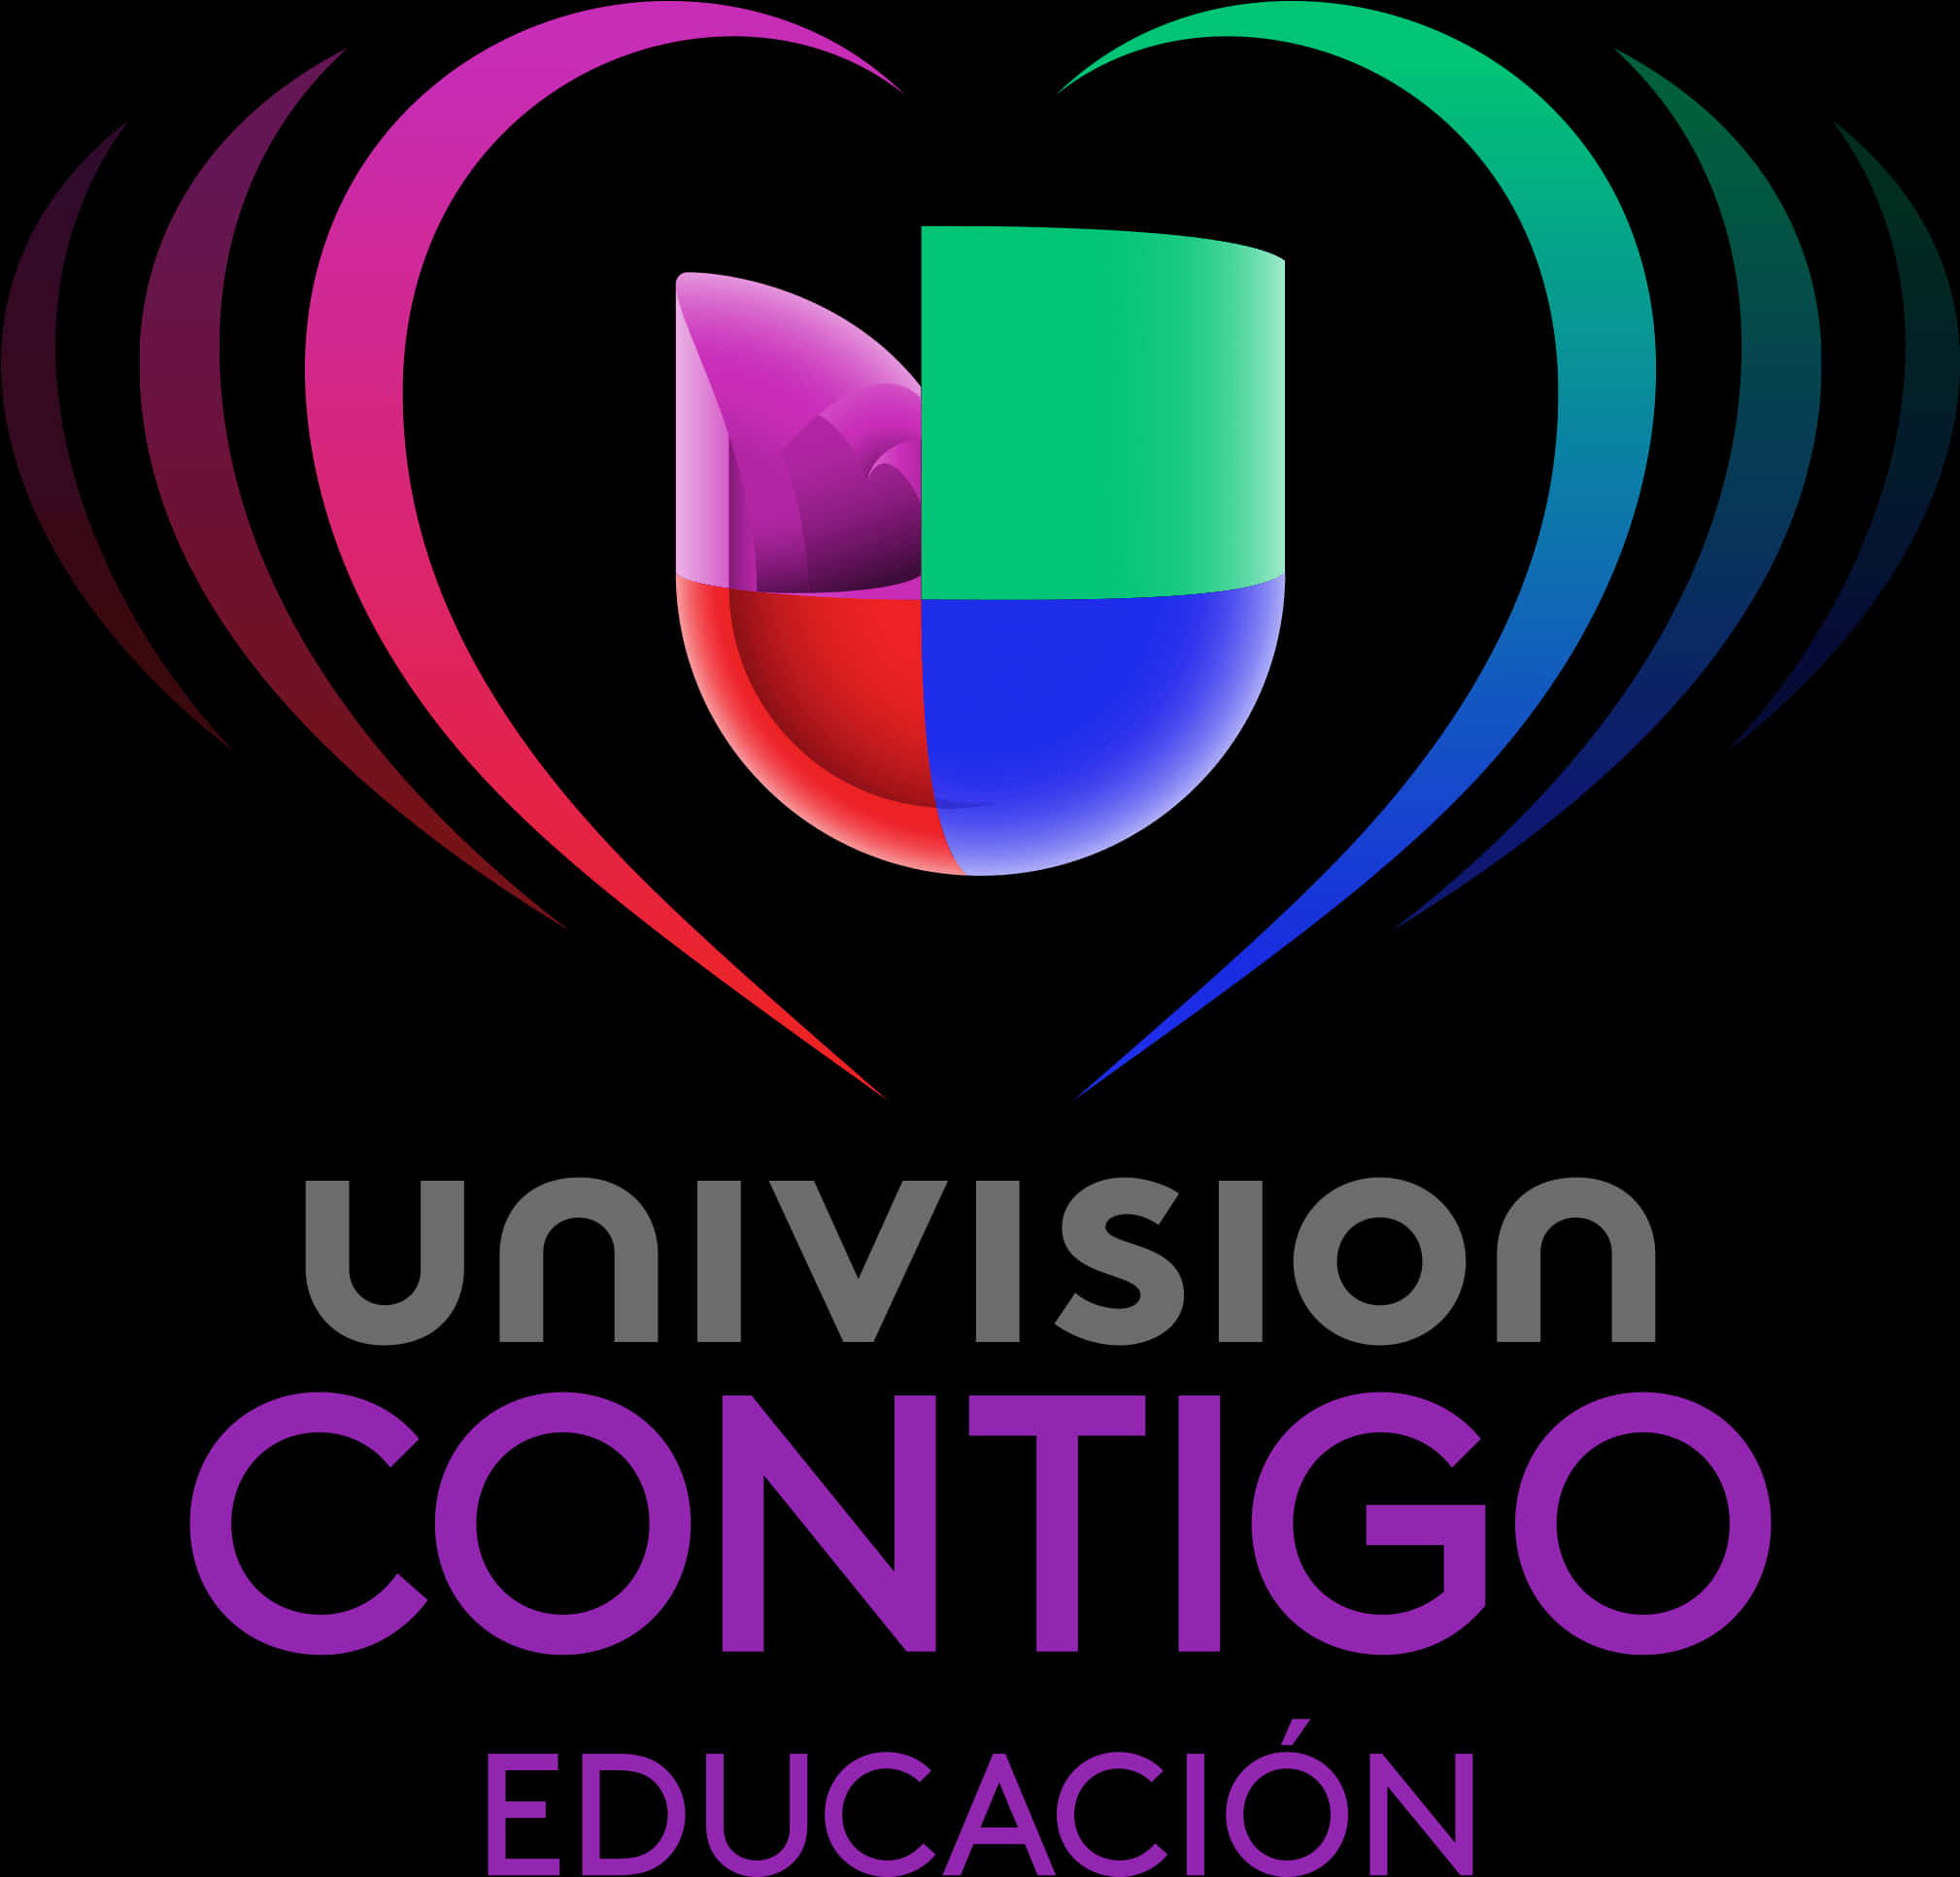 Univision Contigo Educacion Logo PNG image